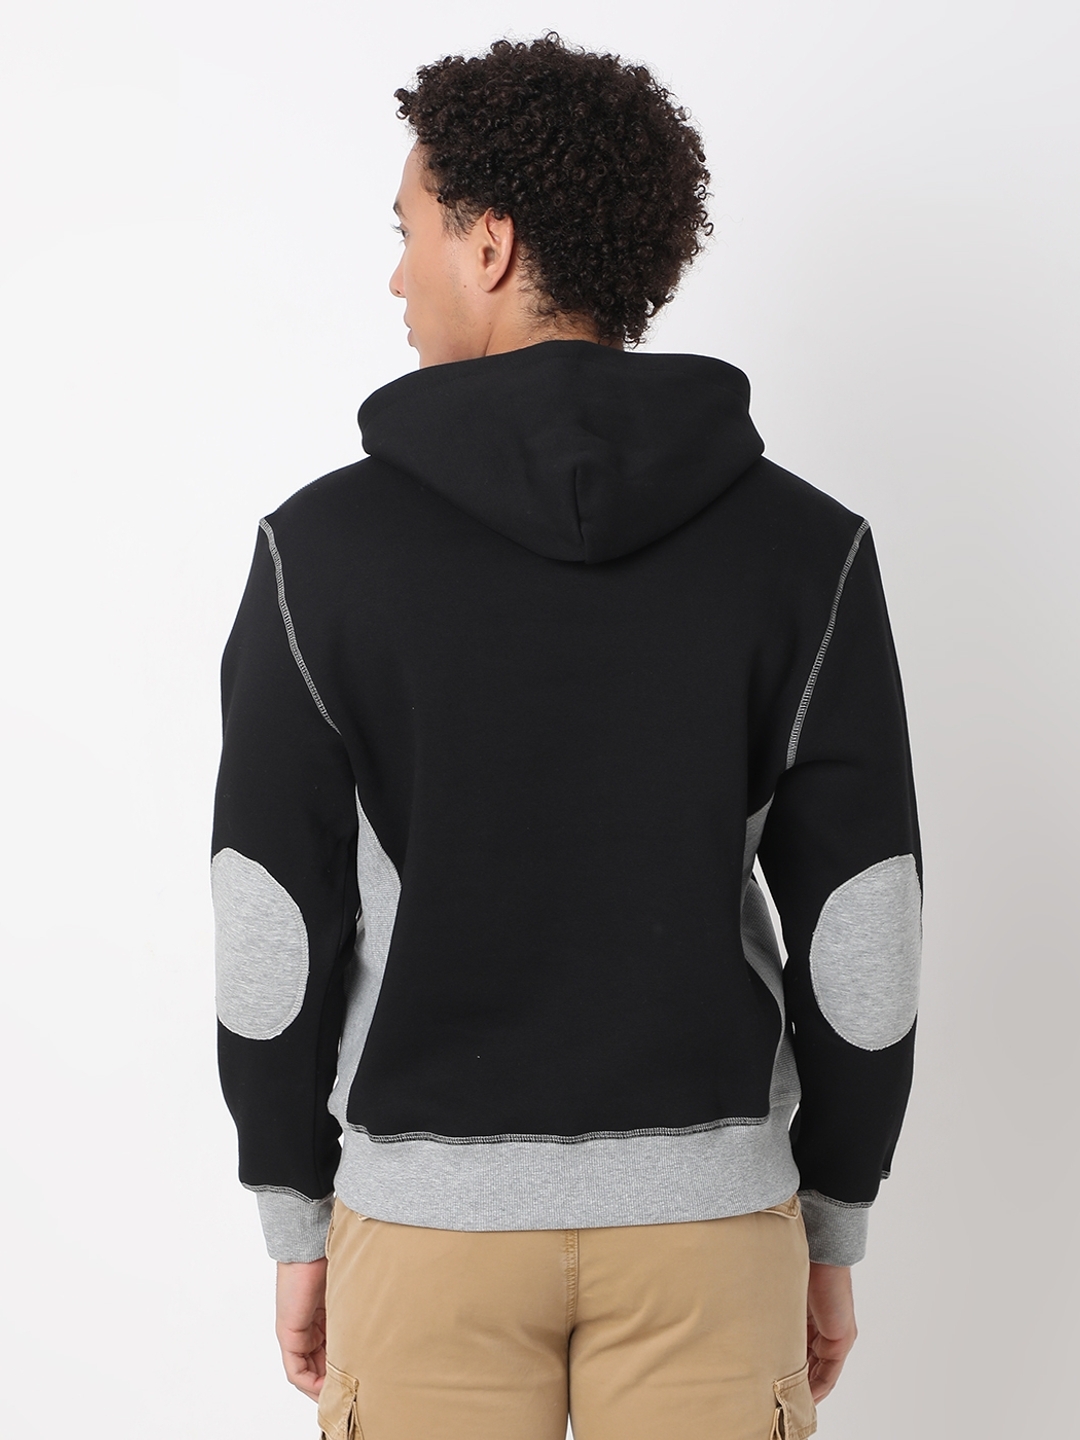 Regular Fit Full Sleeve Hooded Neck Typography Polycotton Sweatshirts